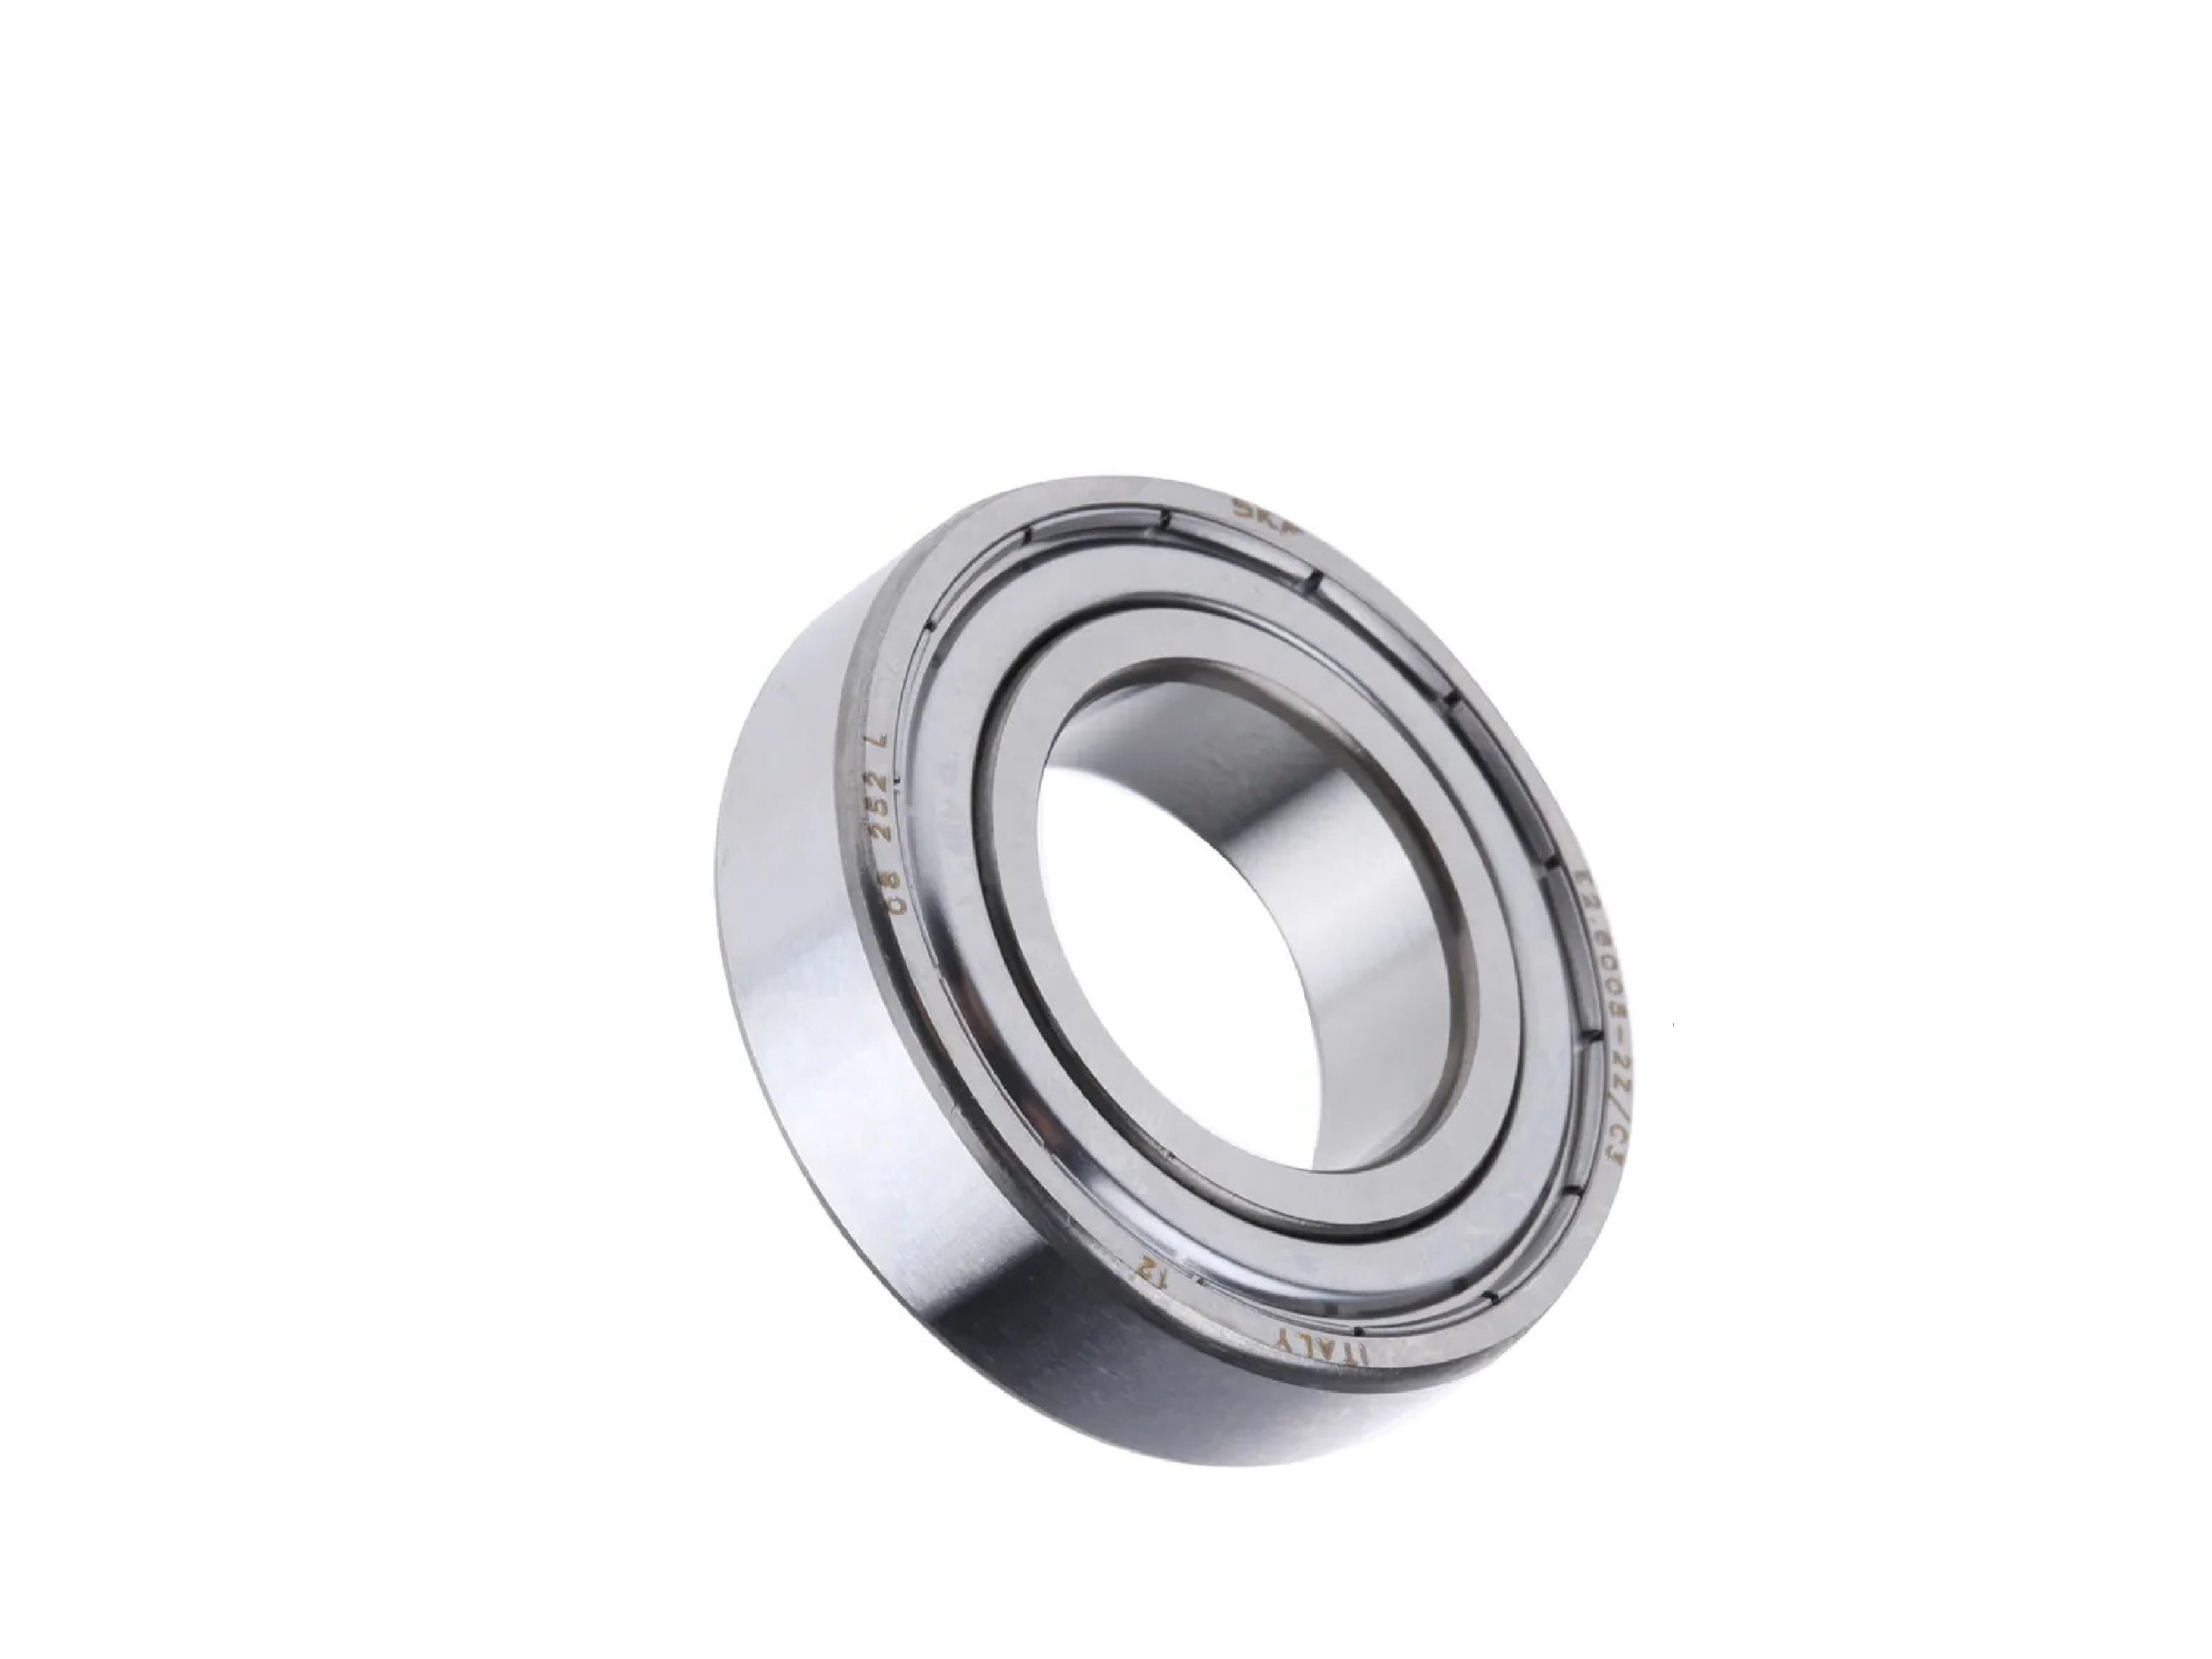 11mm SKF Ball bearings øinn 6300-2RSH SKF BEARINGS 10mm øaußen 35mm W 